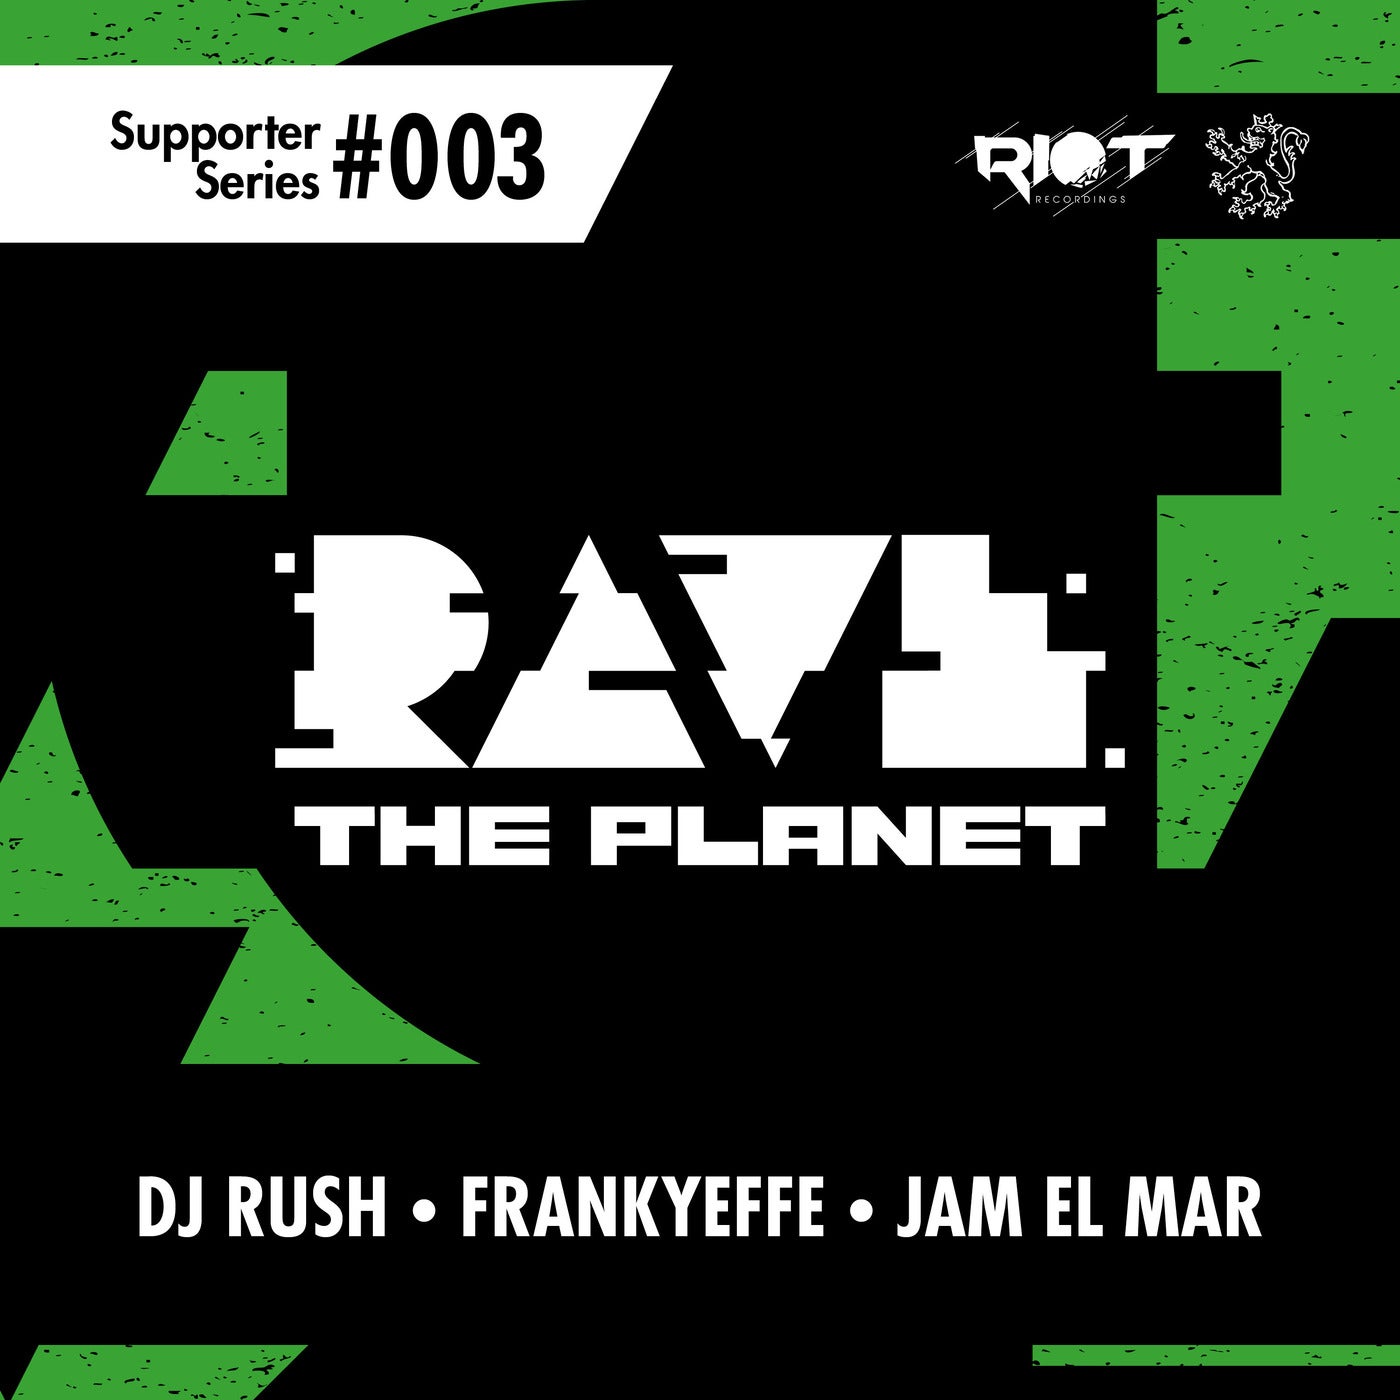 DJ Rush, Frankyeffe, Jam El Mar – Rave the Planet: Supporter Series, Vol. 003 [RTP003]